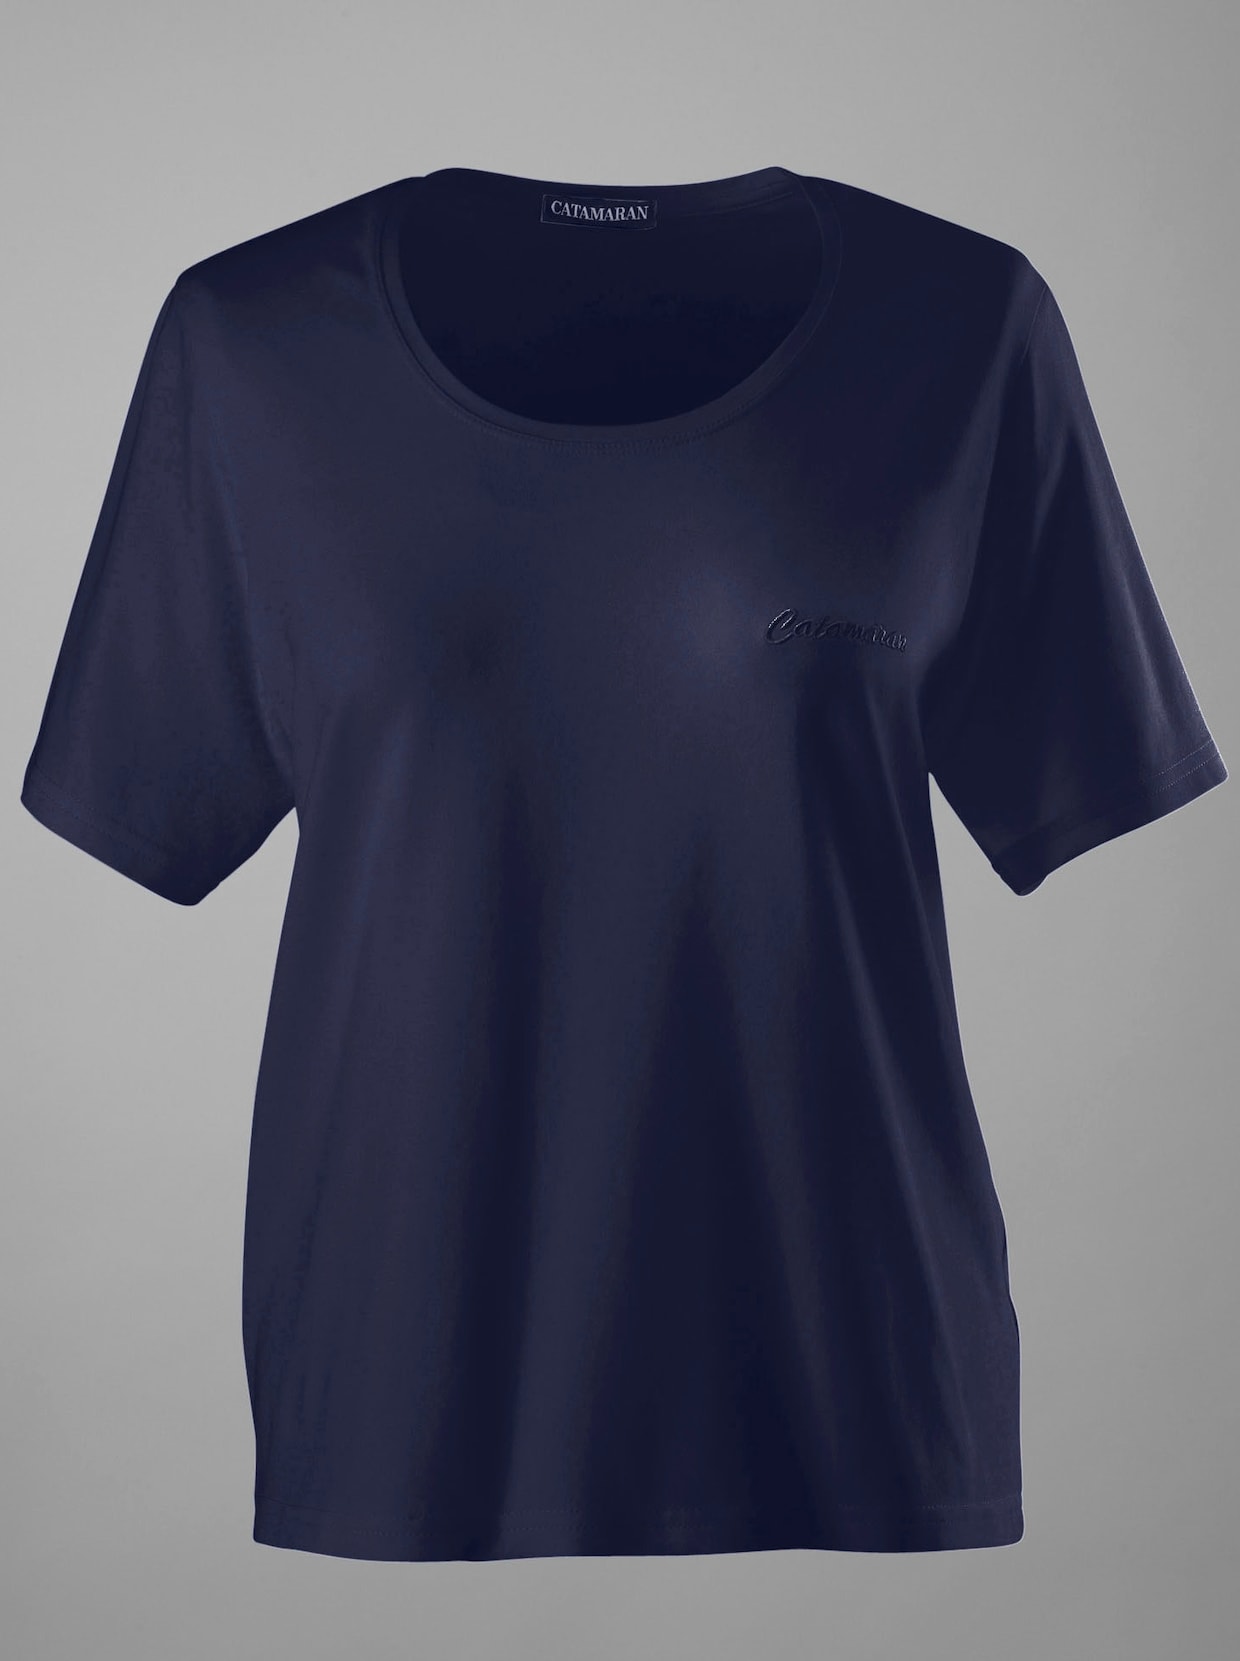 Catamaran Sports T-shirt de sport - marine + bleu clair